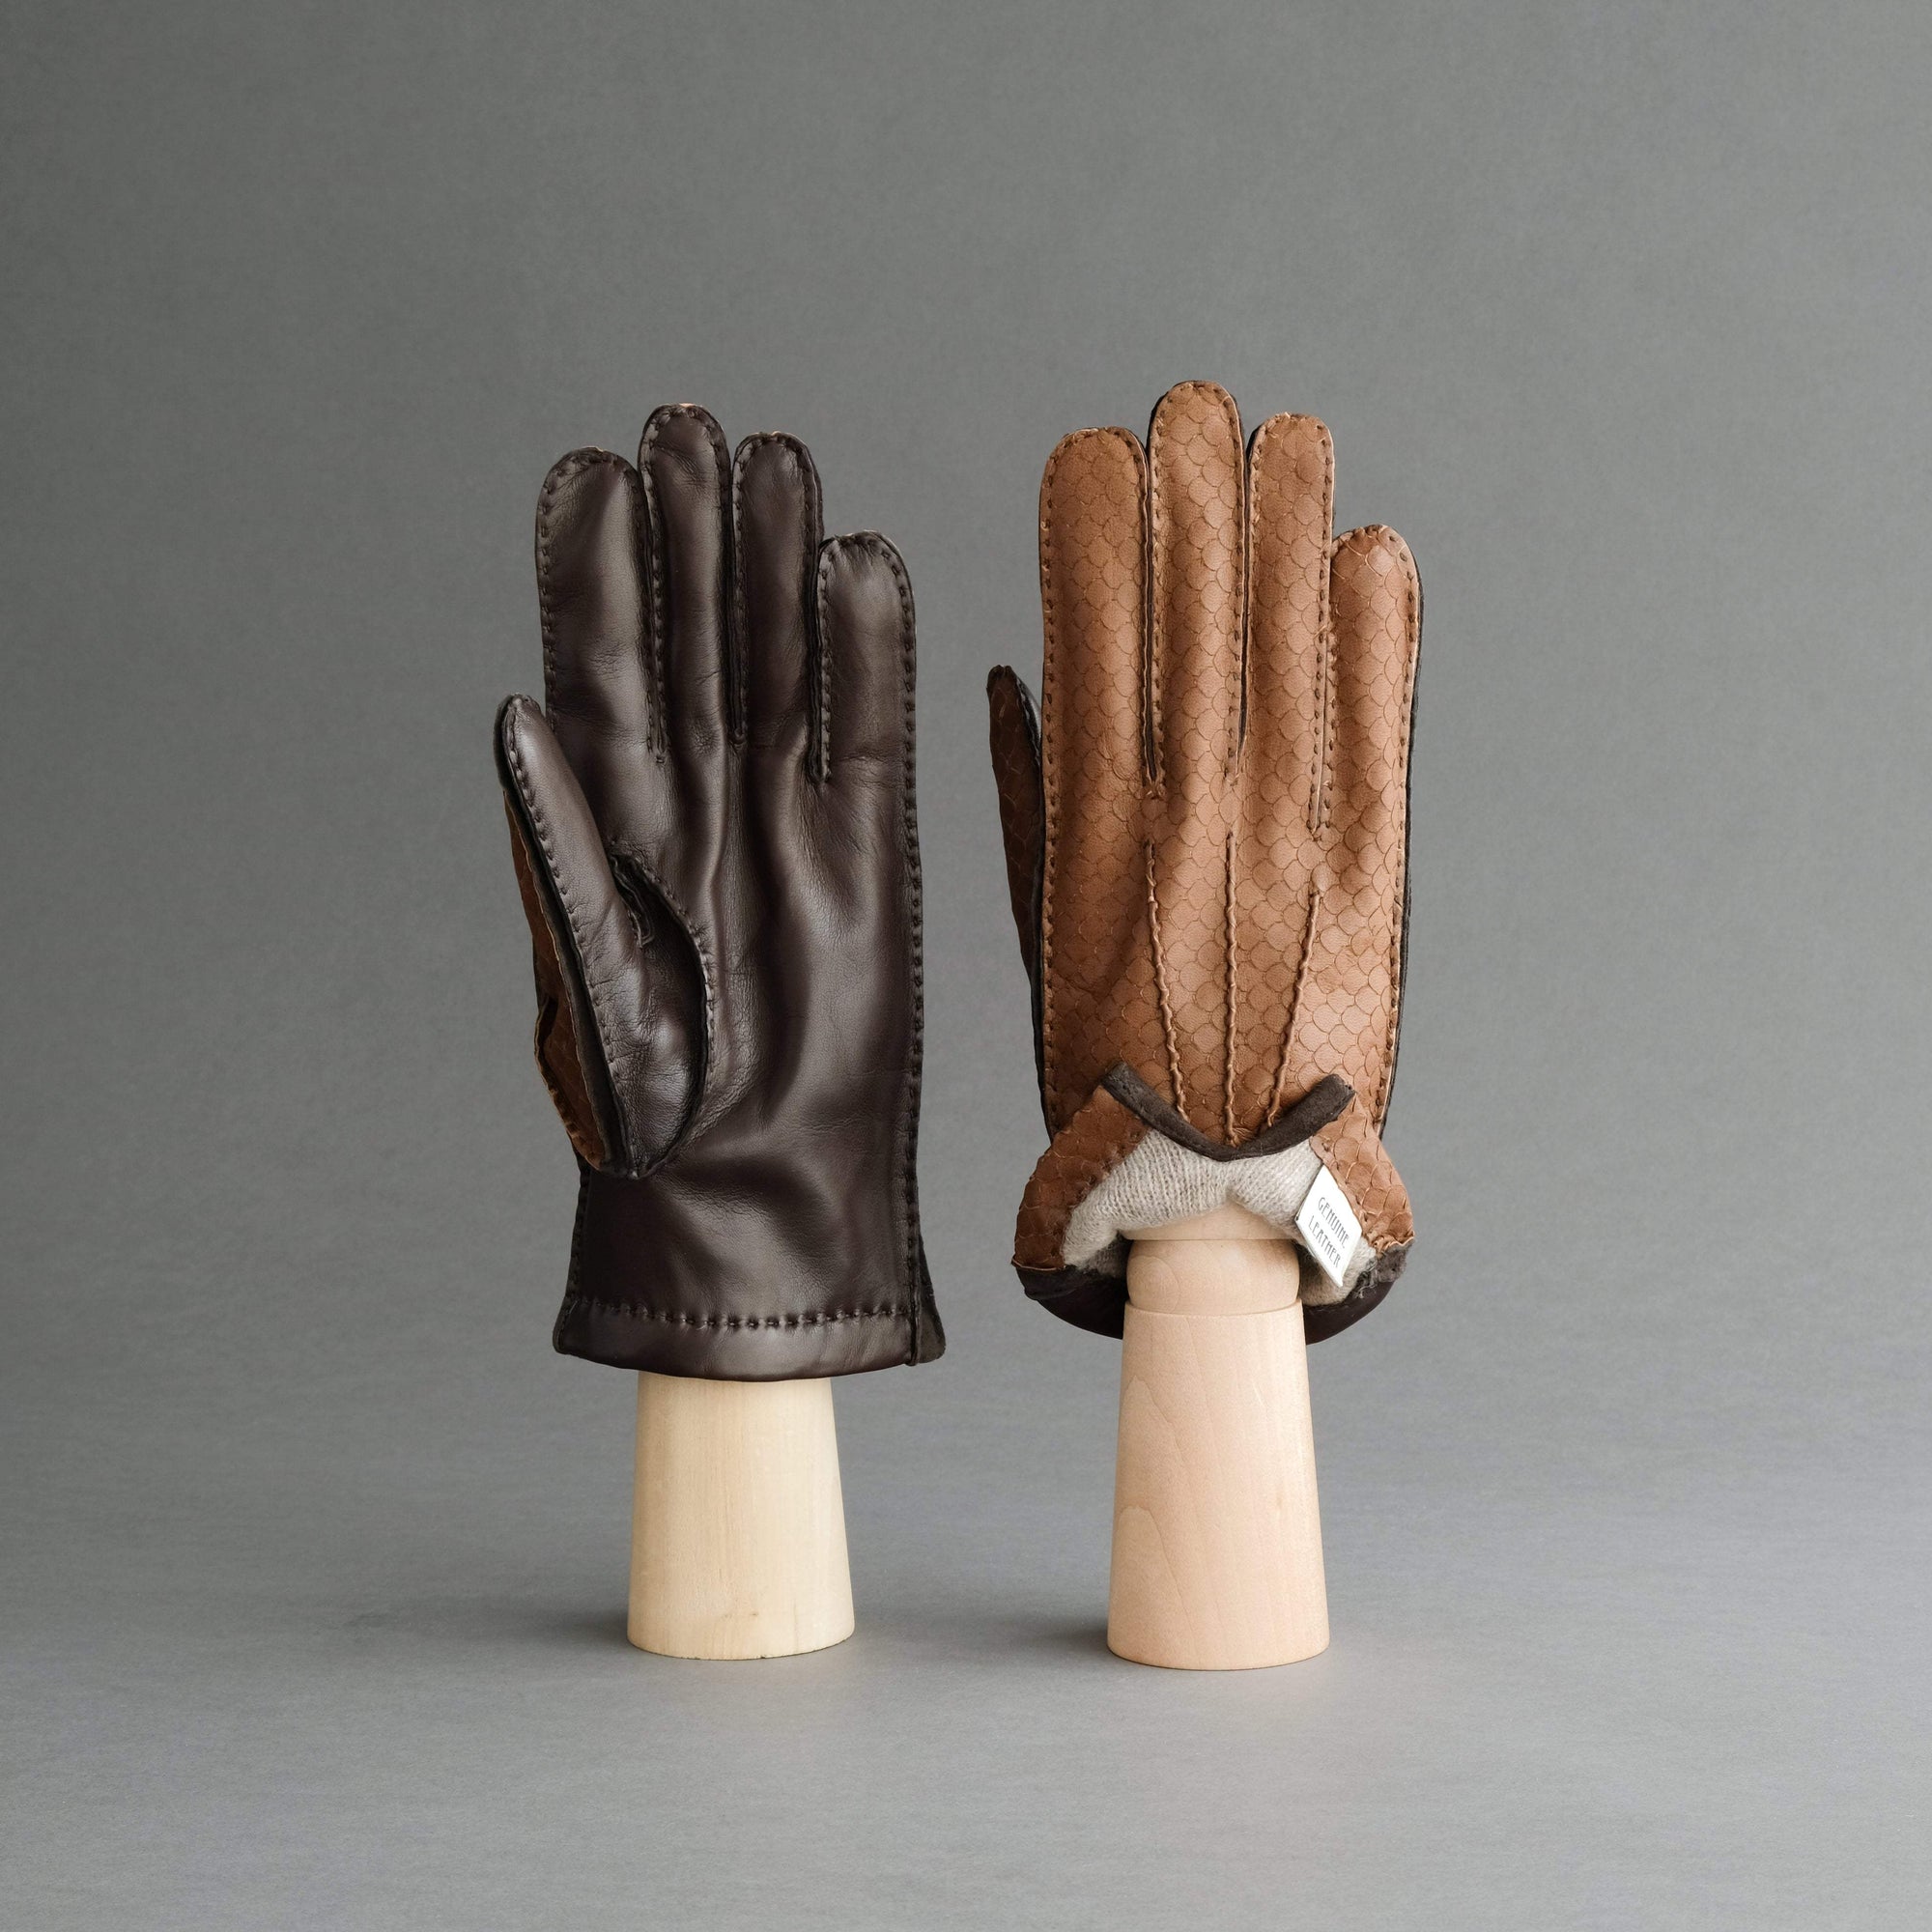 Gentlemen's Gloves from Dark Brown/Cognac Hair Sheep Nappa Lined with Cashmere - TR Handschuhe Wien - Thomas Riemer Handmade Gloves